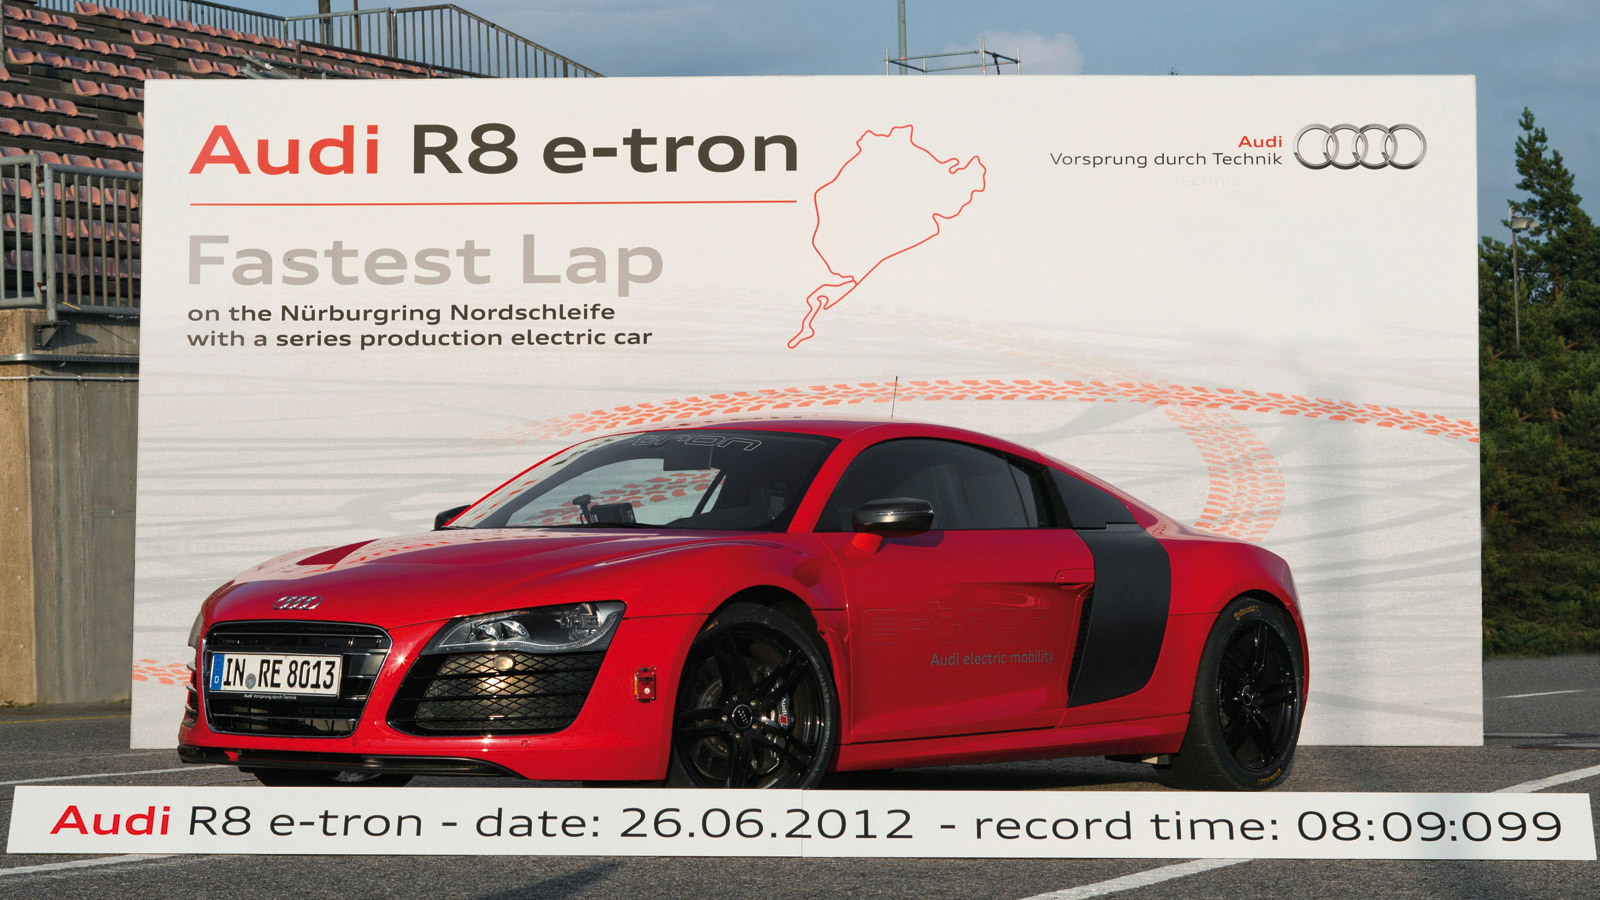 2013 Audi R8 e-tron with 8:09.099 Nürburgring lap time